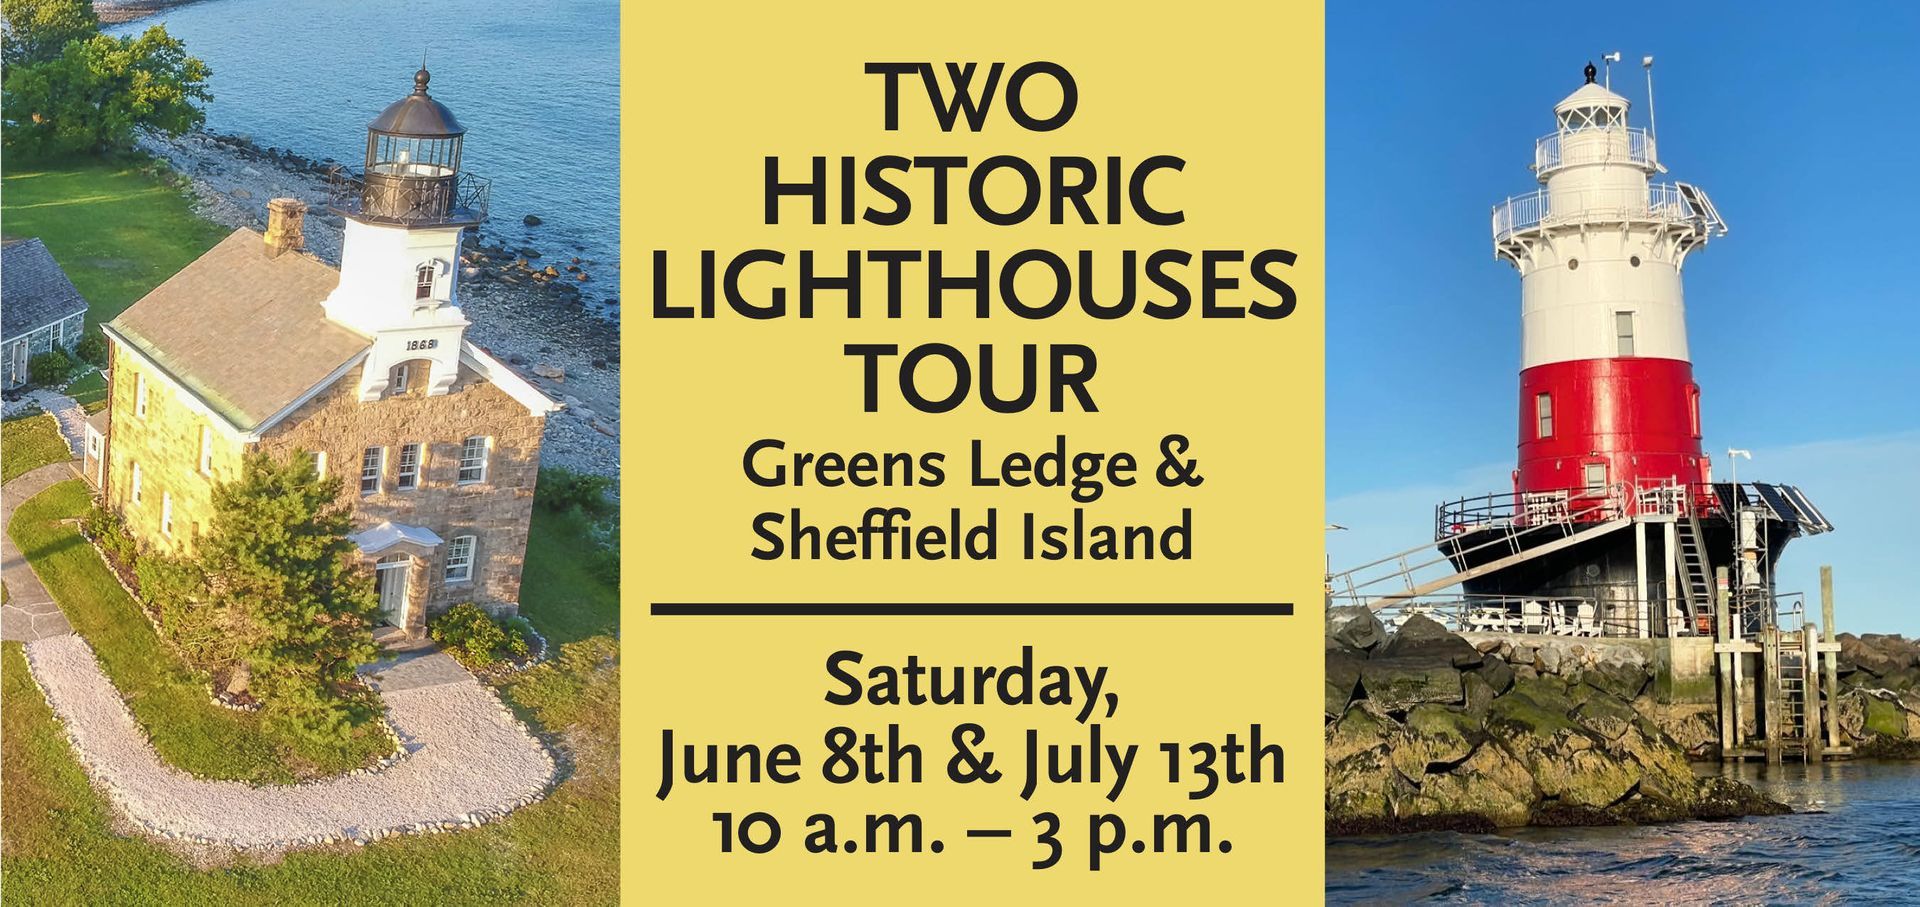 ledge light lighthouse tours